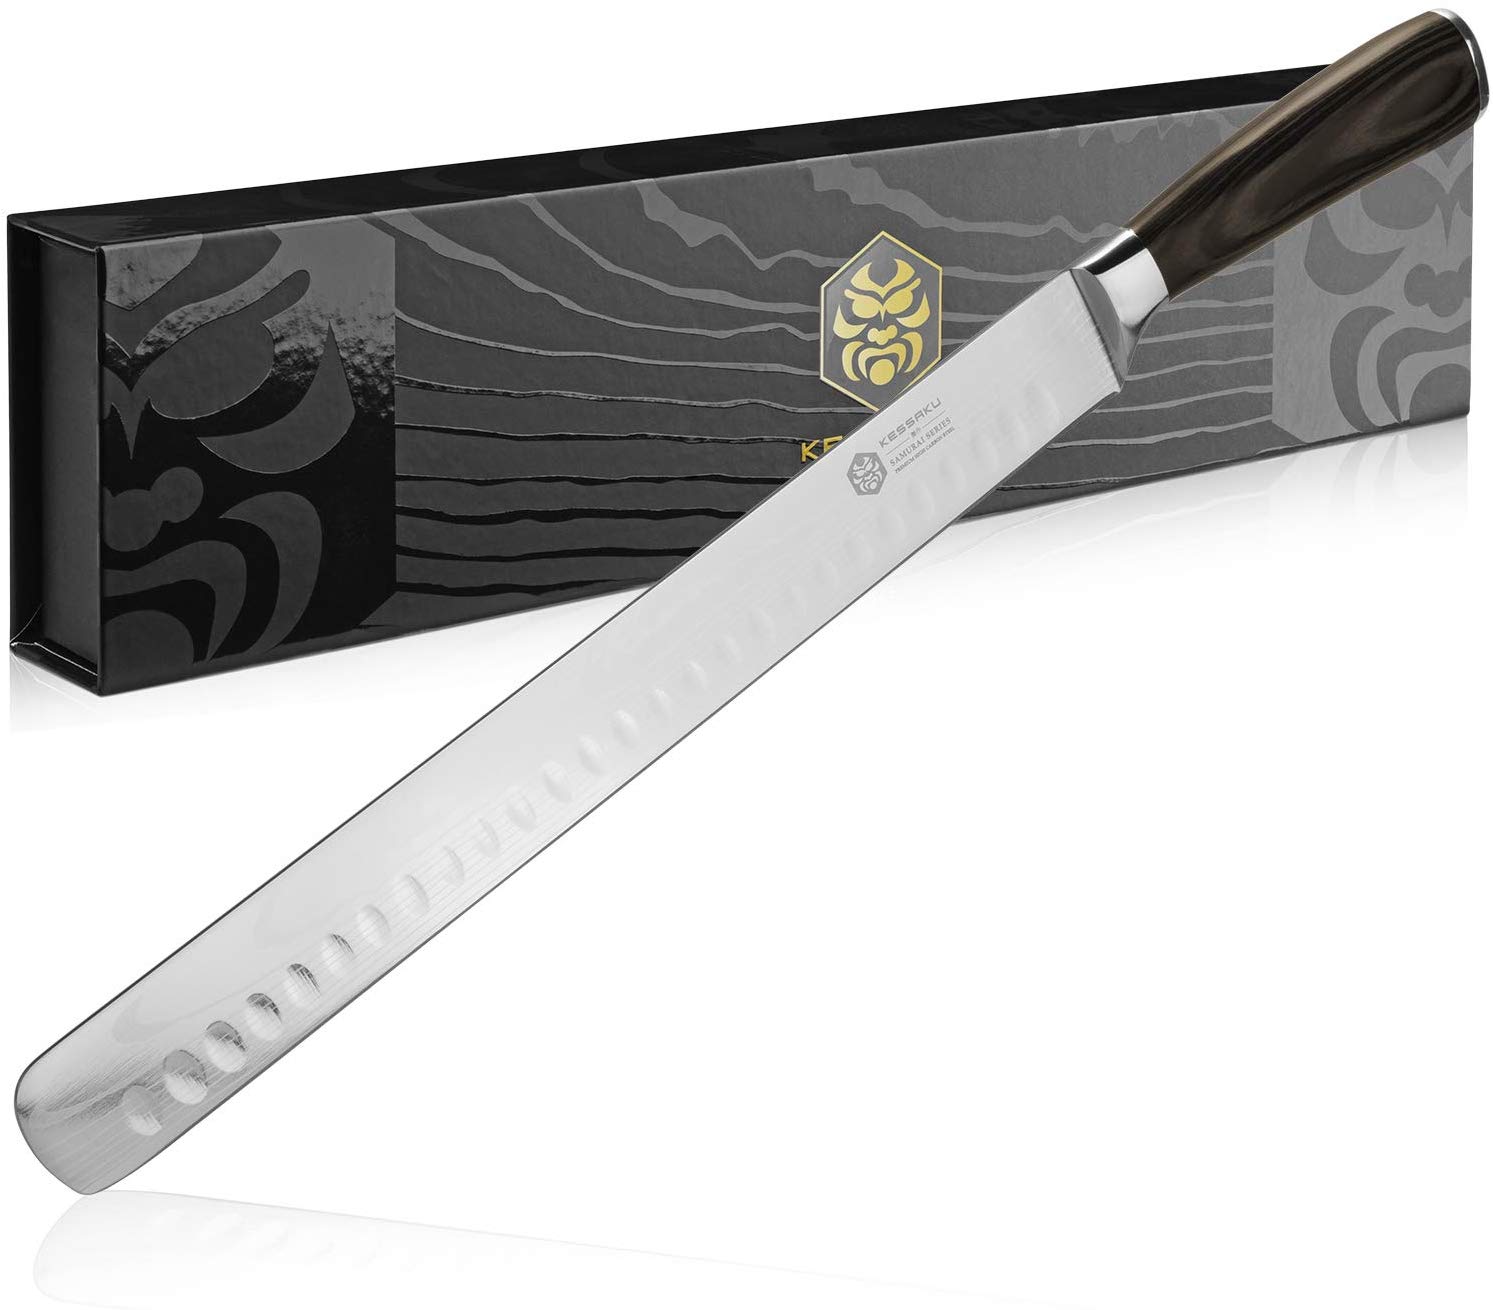 Kessaku Samurai Series Stainless Steel Carving Knife, 12-Inch